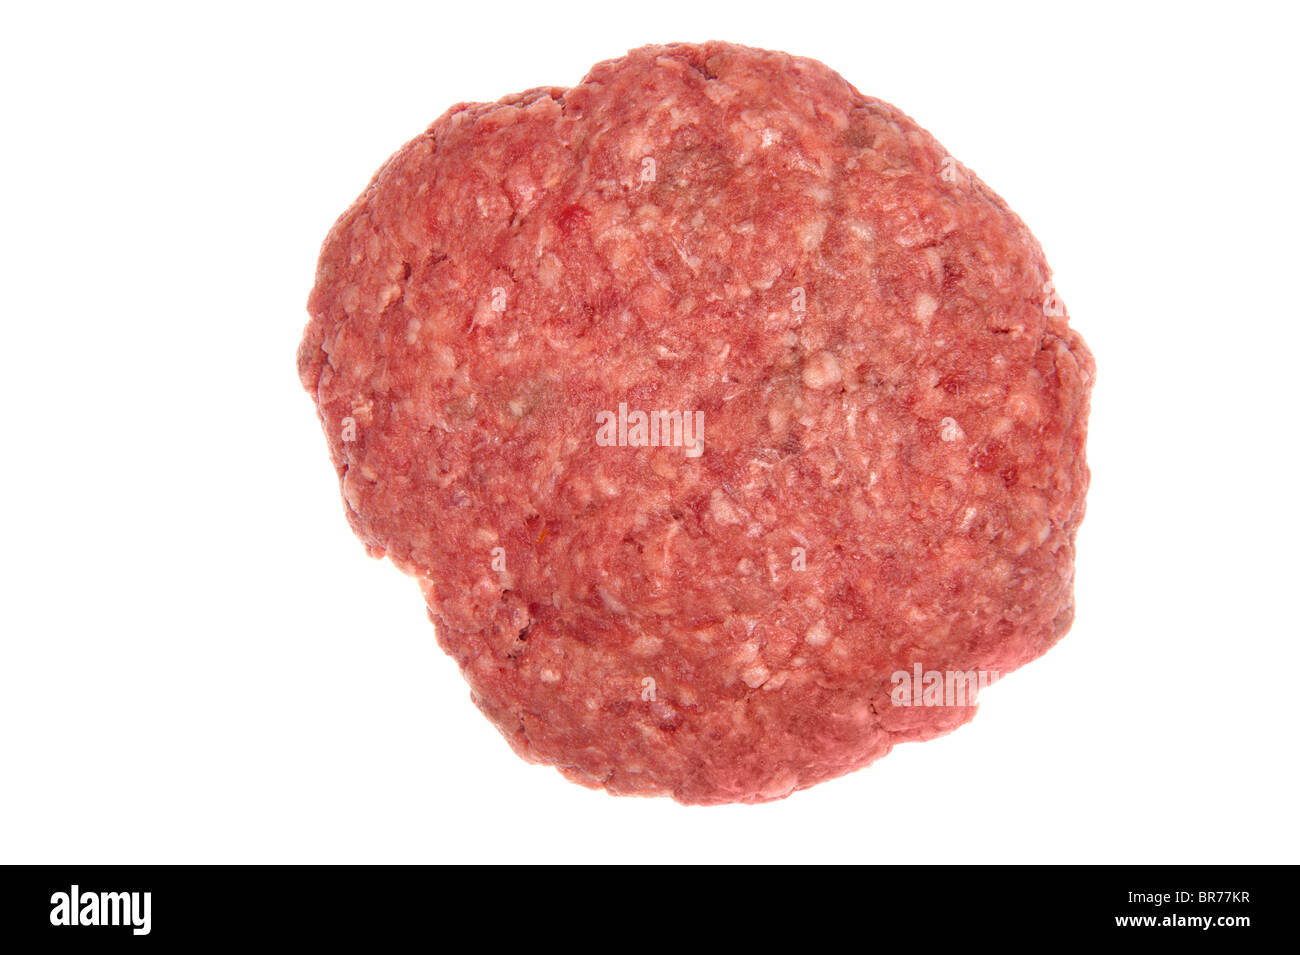 A raw hamburger patty isolated on white. Stock Photo